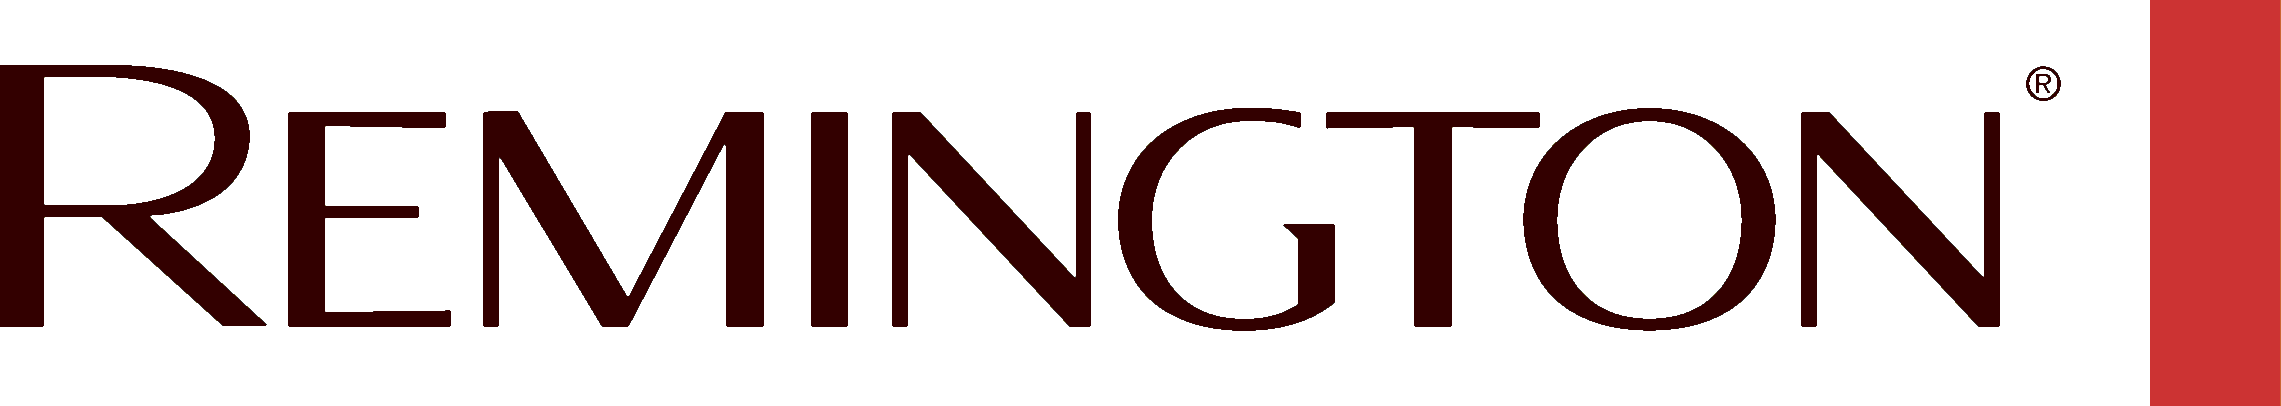 Remington Banner Logo